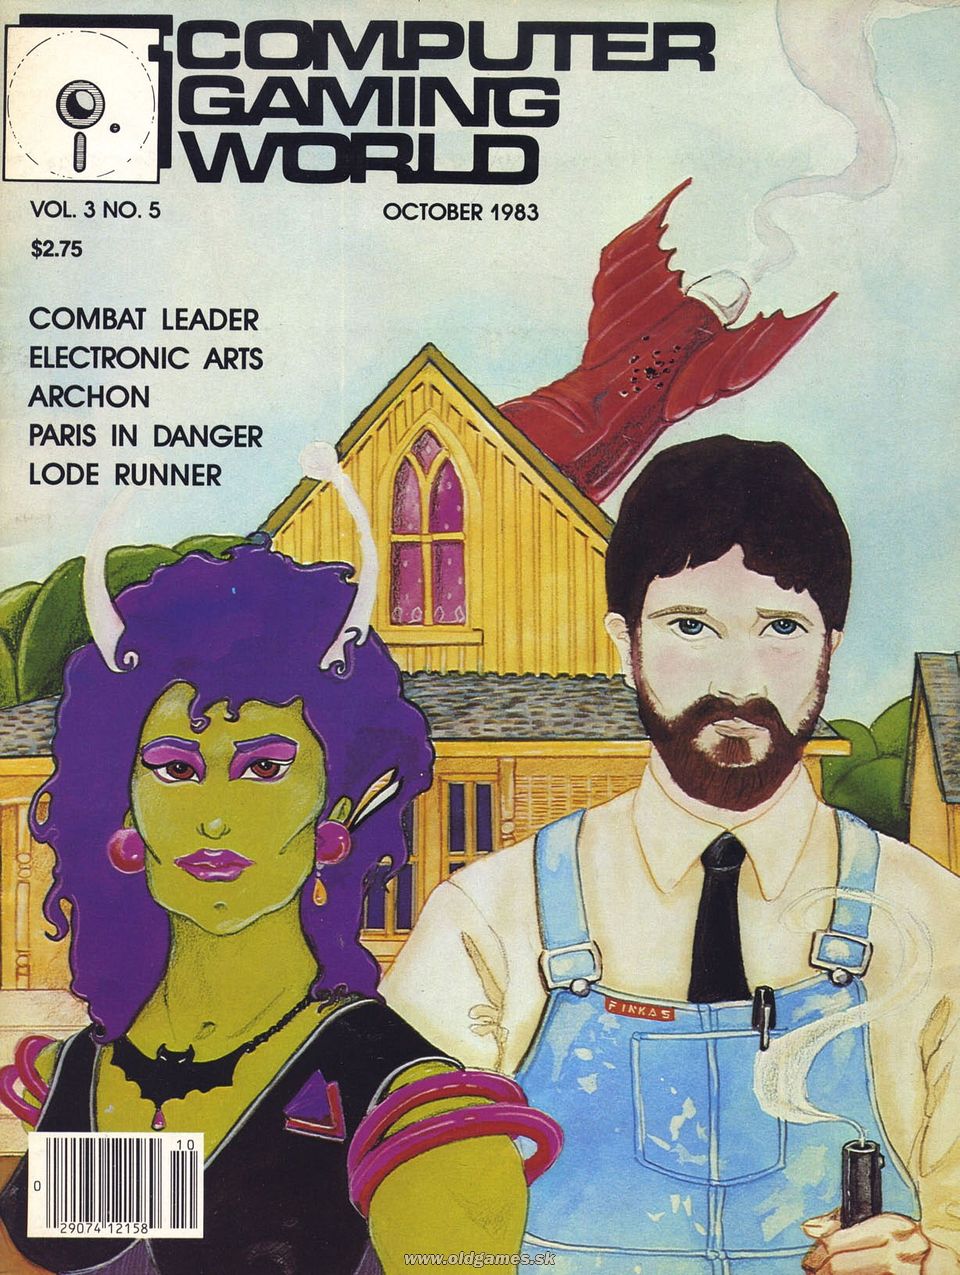 CGW 3.5 (October 1983)